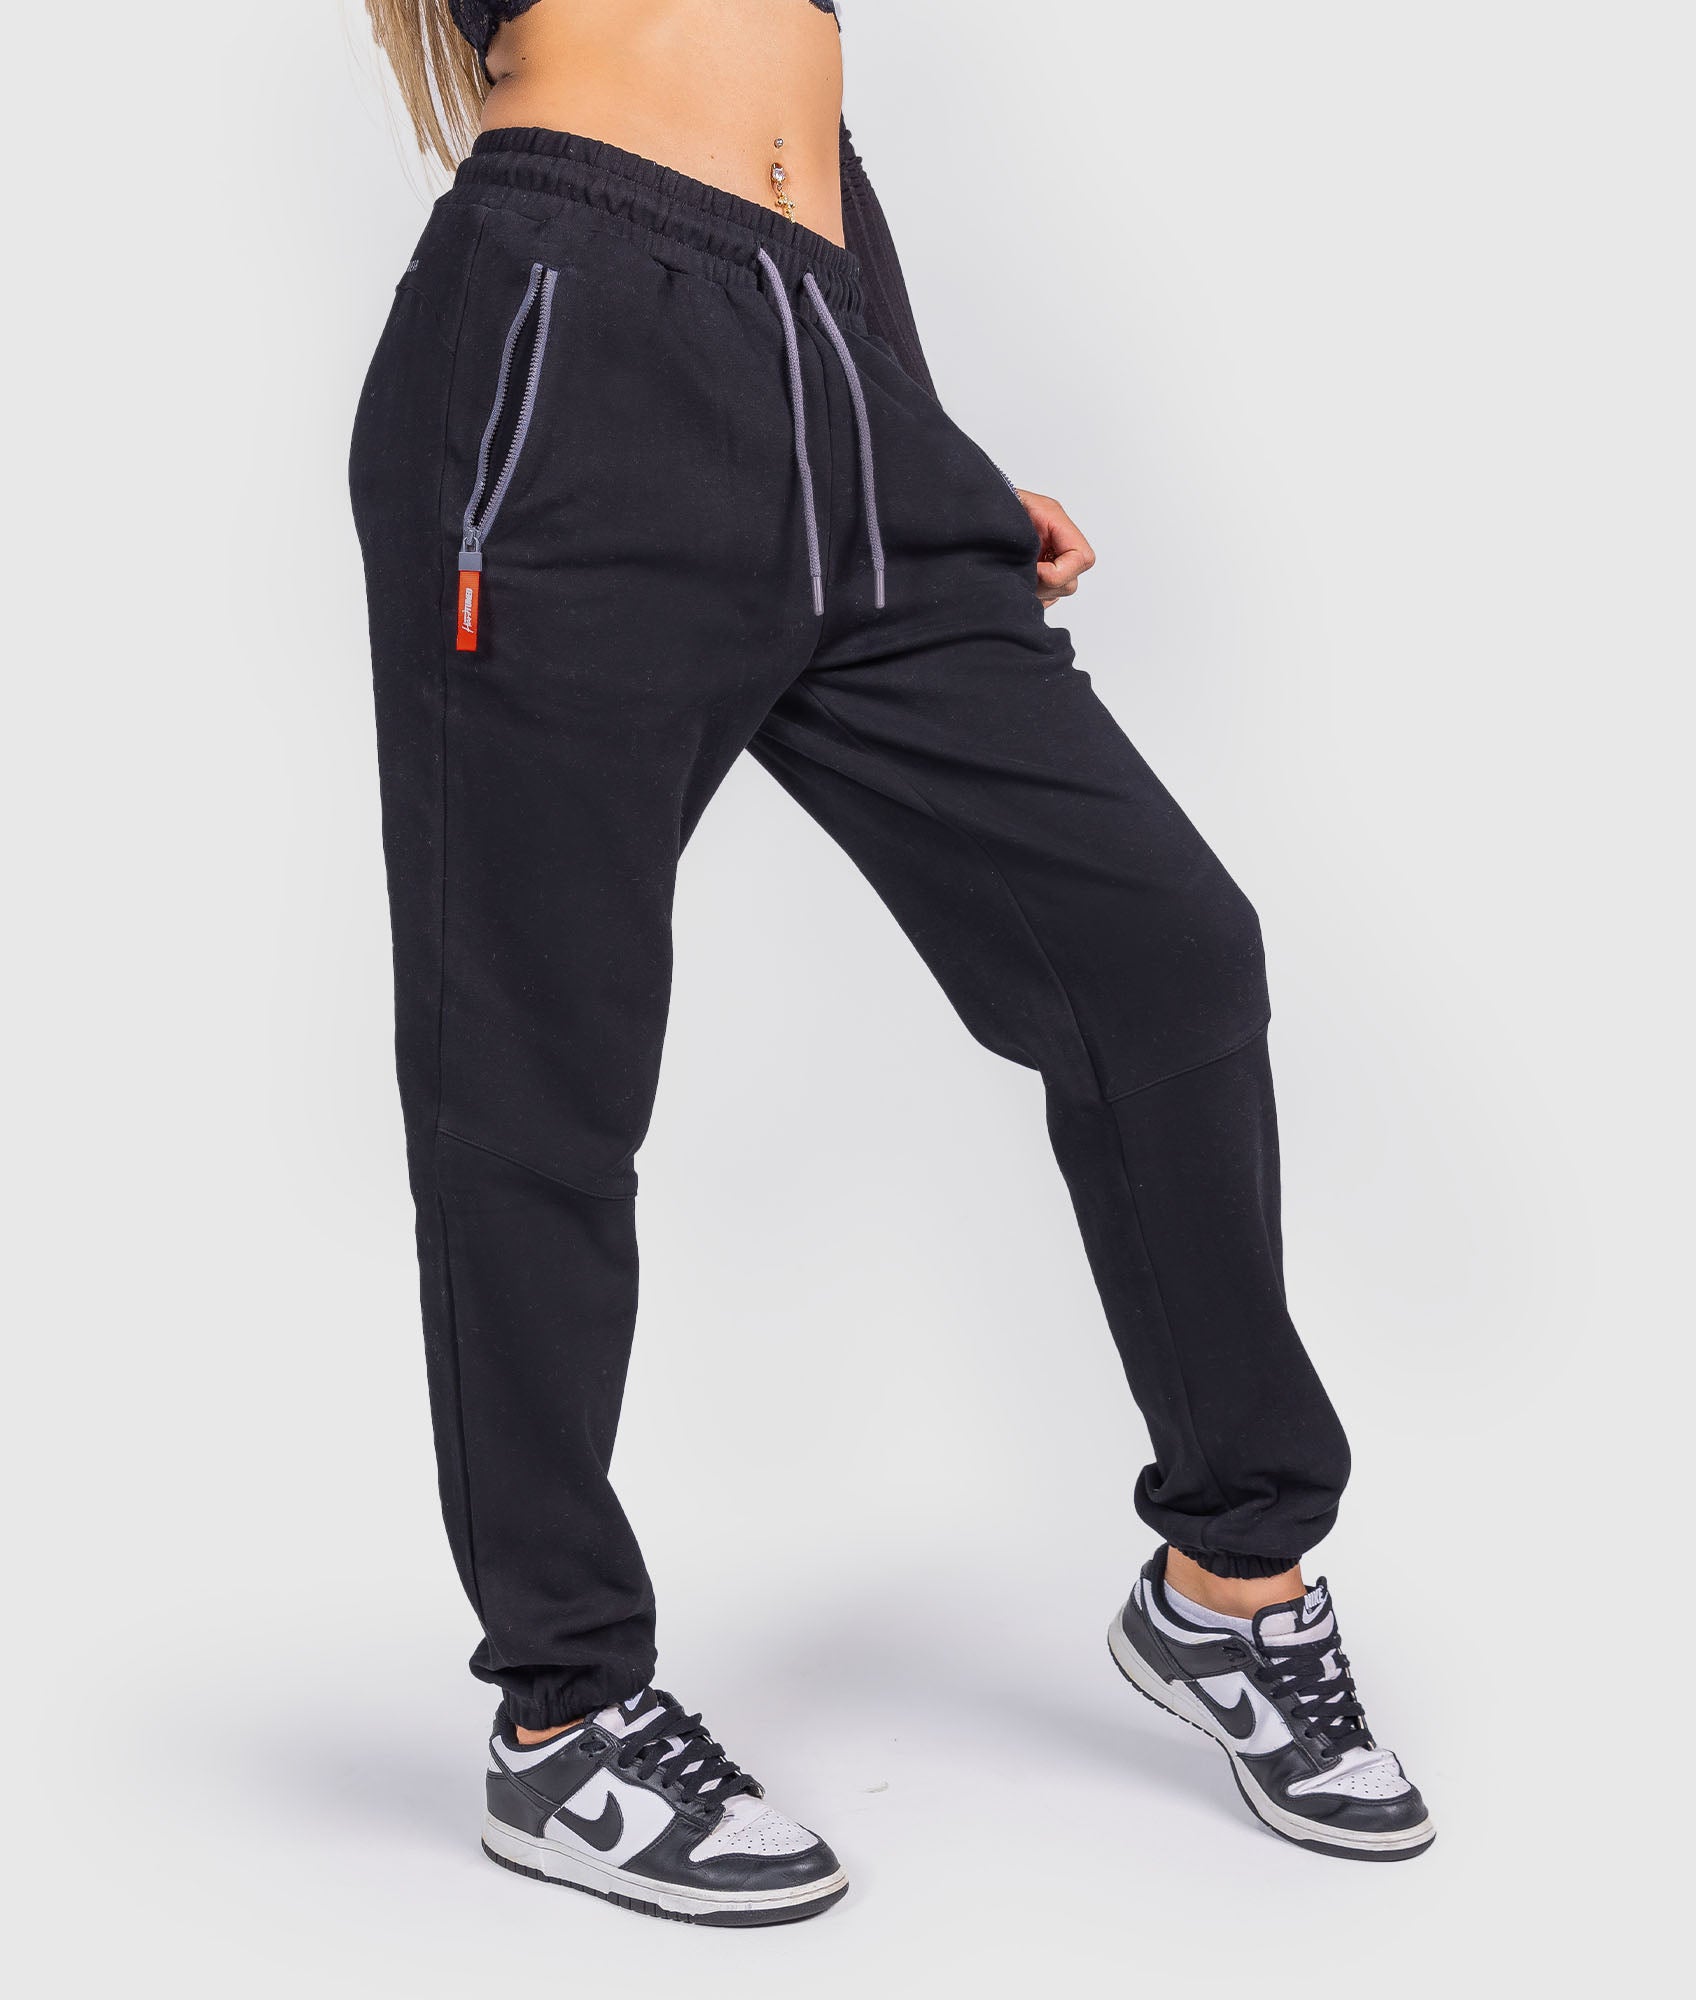 Women's Katakana P1 Fleece Track Pants - Black